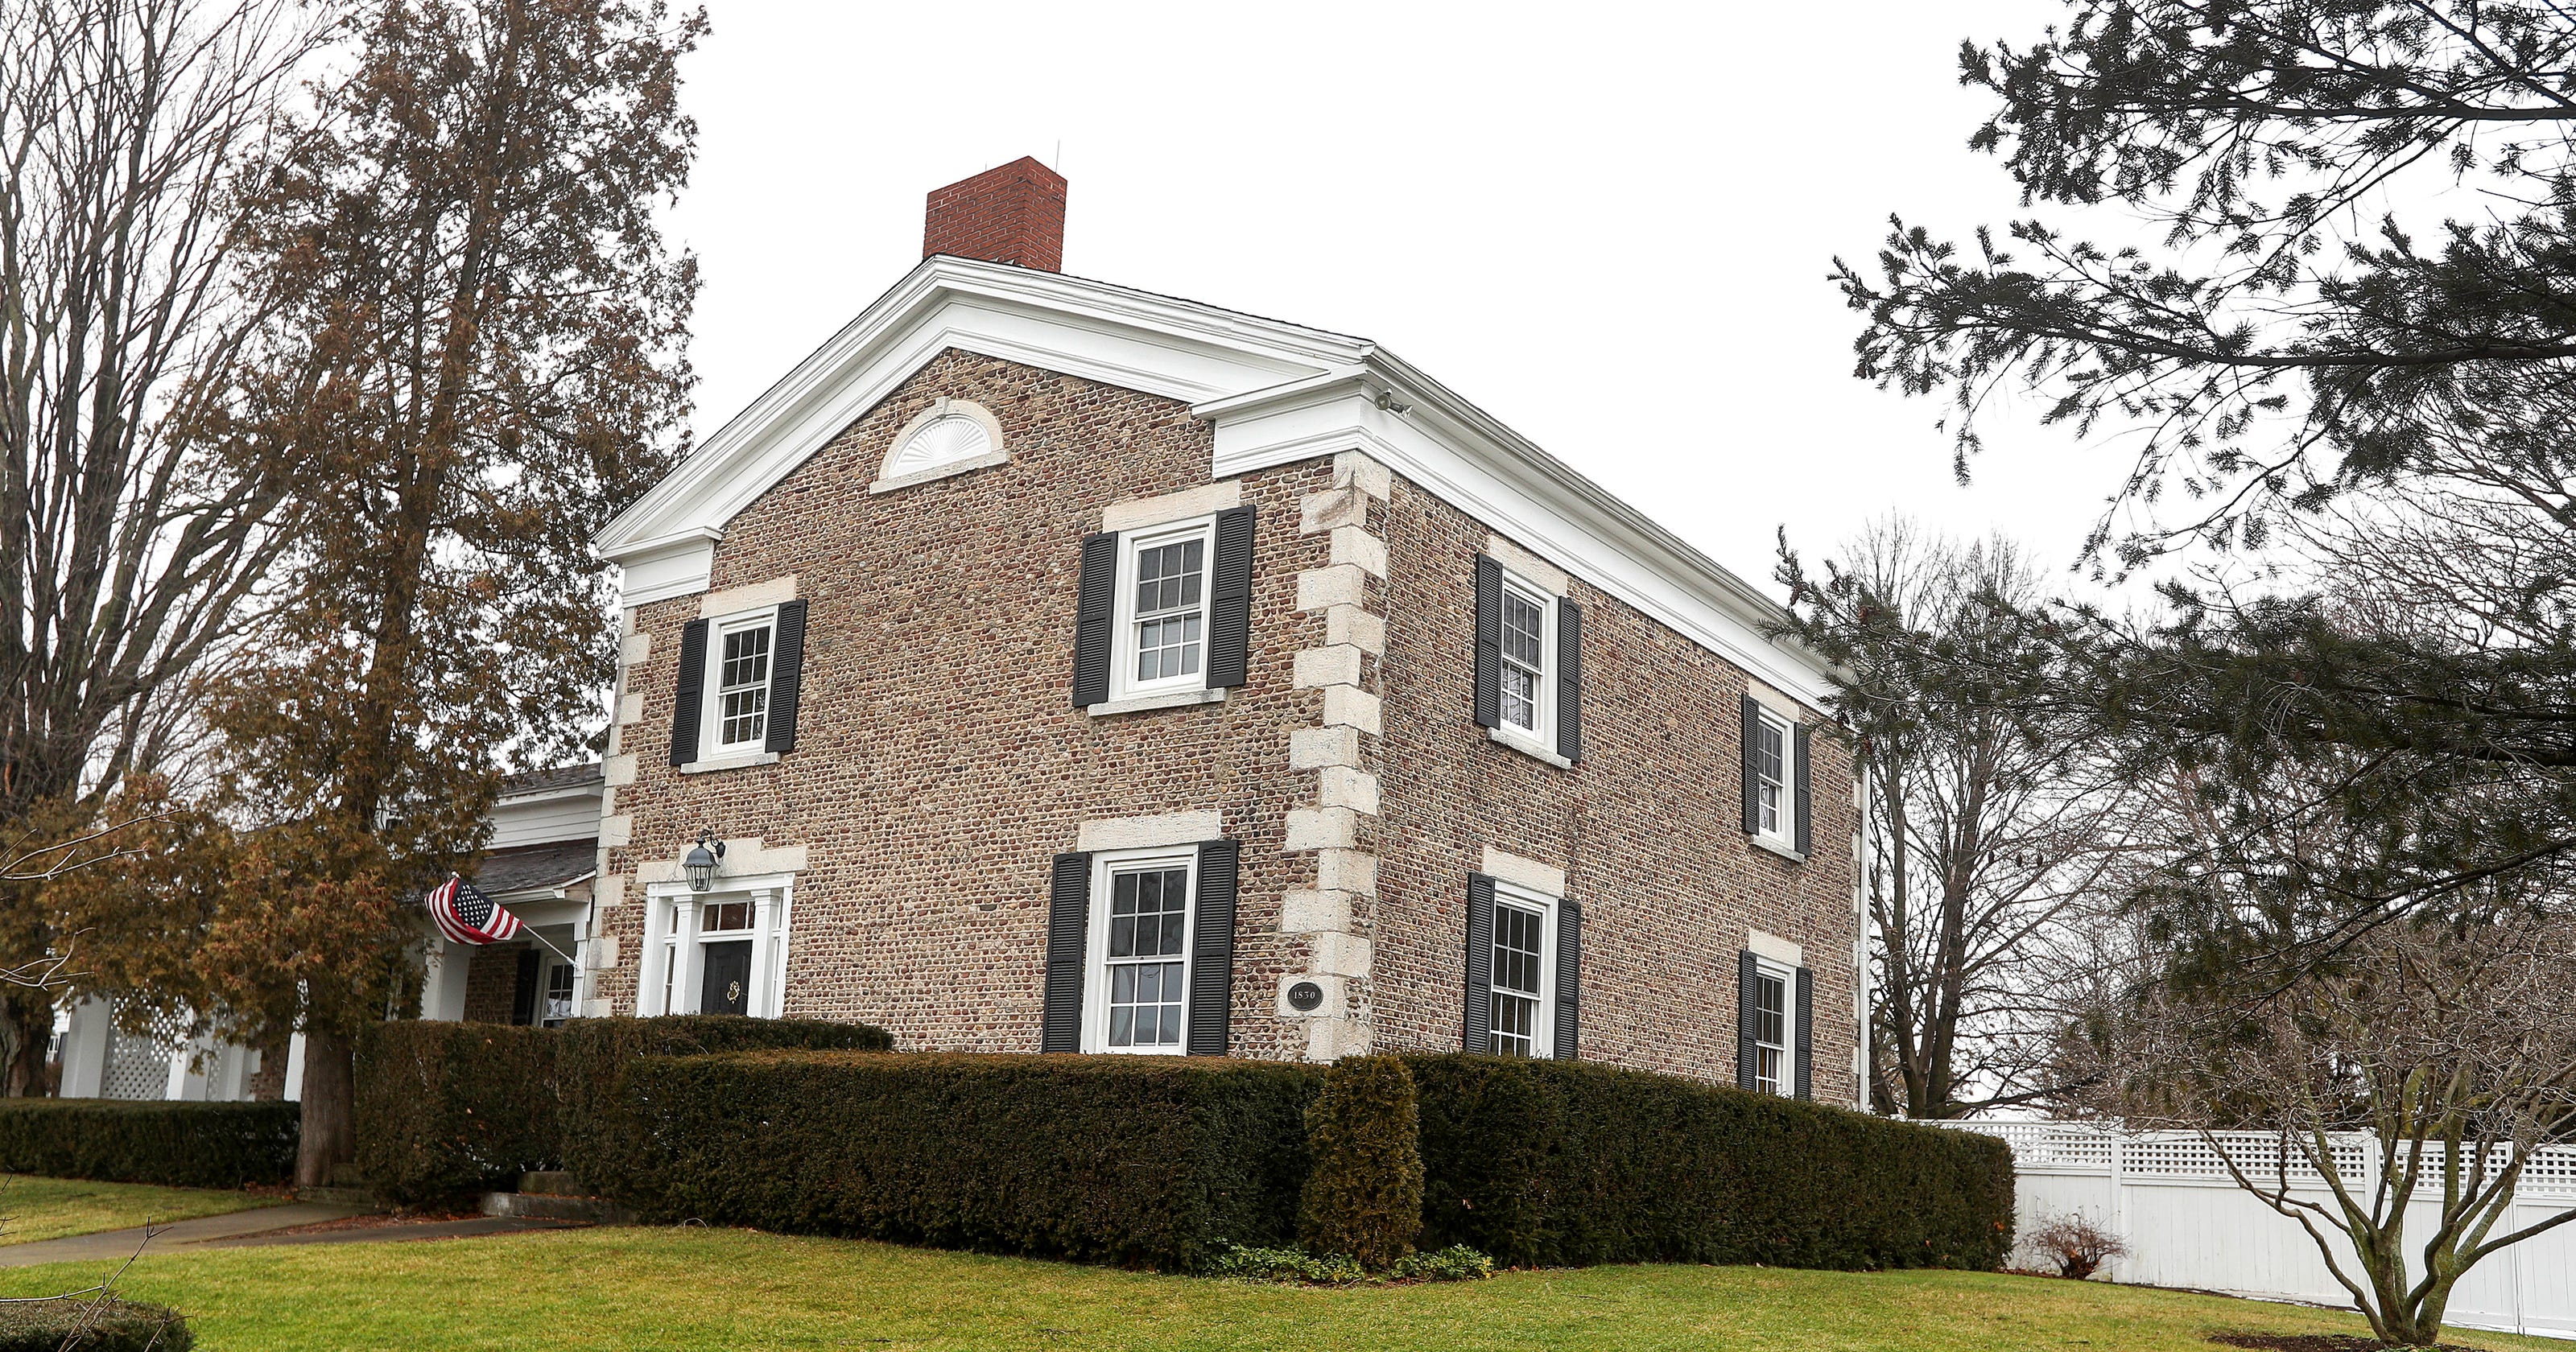 Rochester NY real estate listings: Cobblestone home for sale in Wheatland